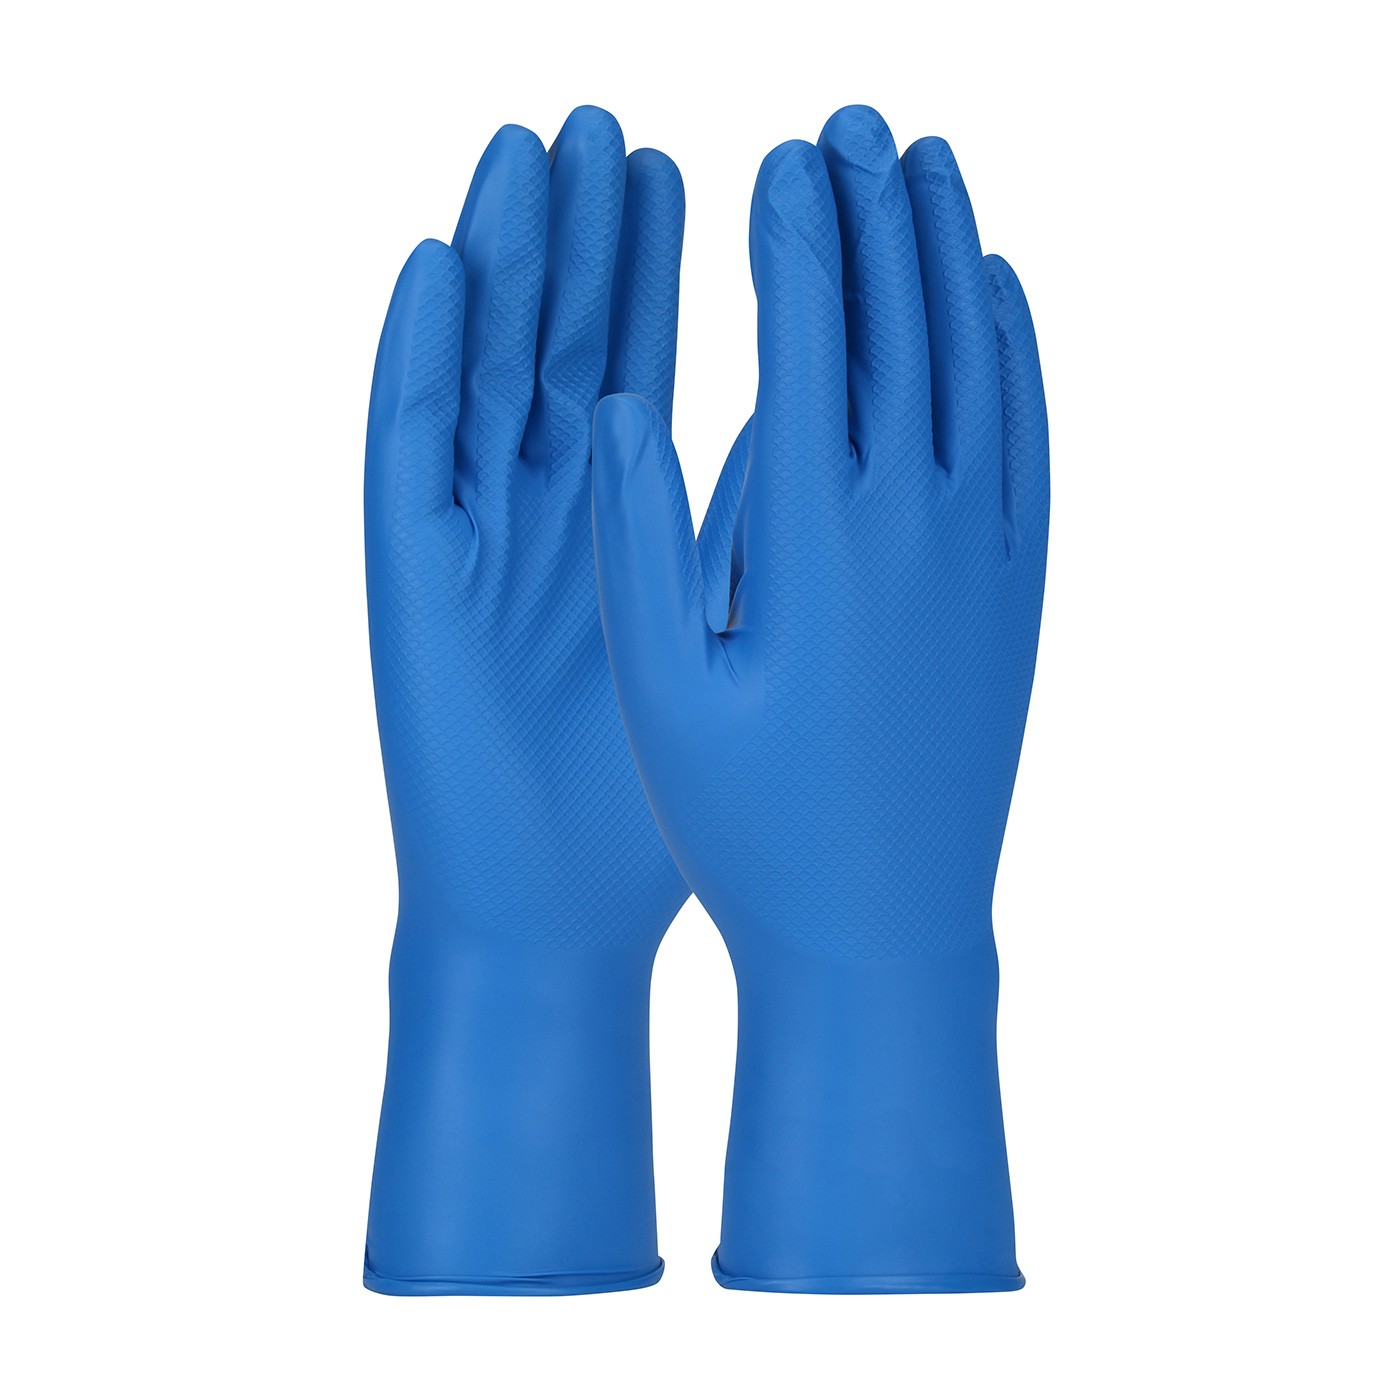 Grippaz™ Food Plus Superior Ambidextrous Nitrile Glove with Textured Fish Scale Grip - 8 Mil  (#67-308)